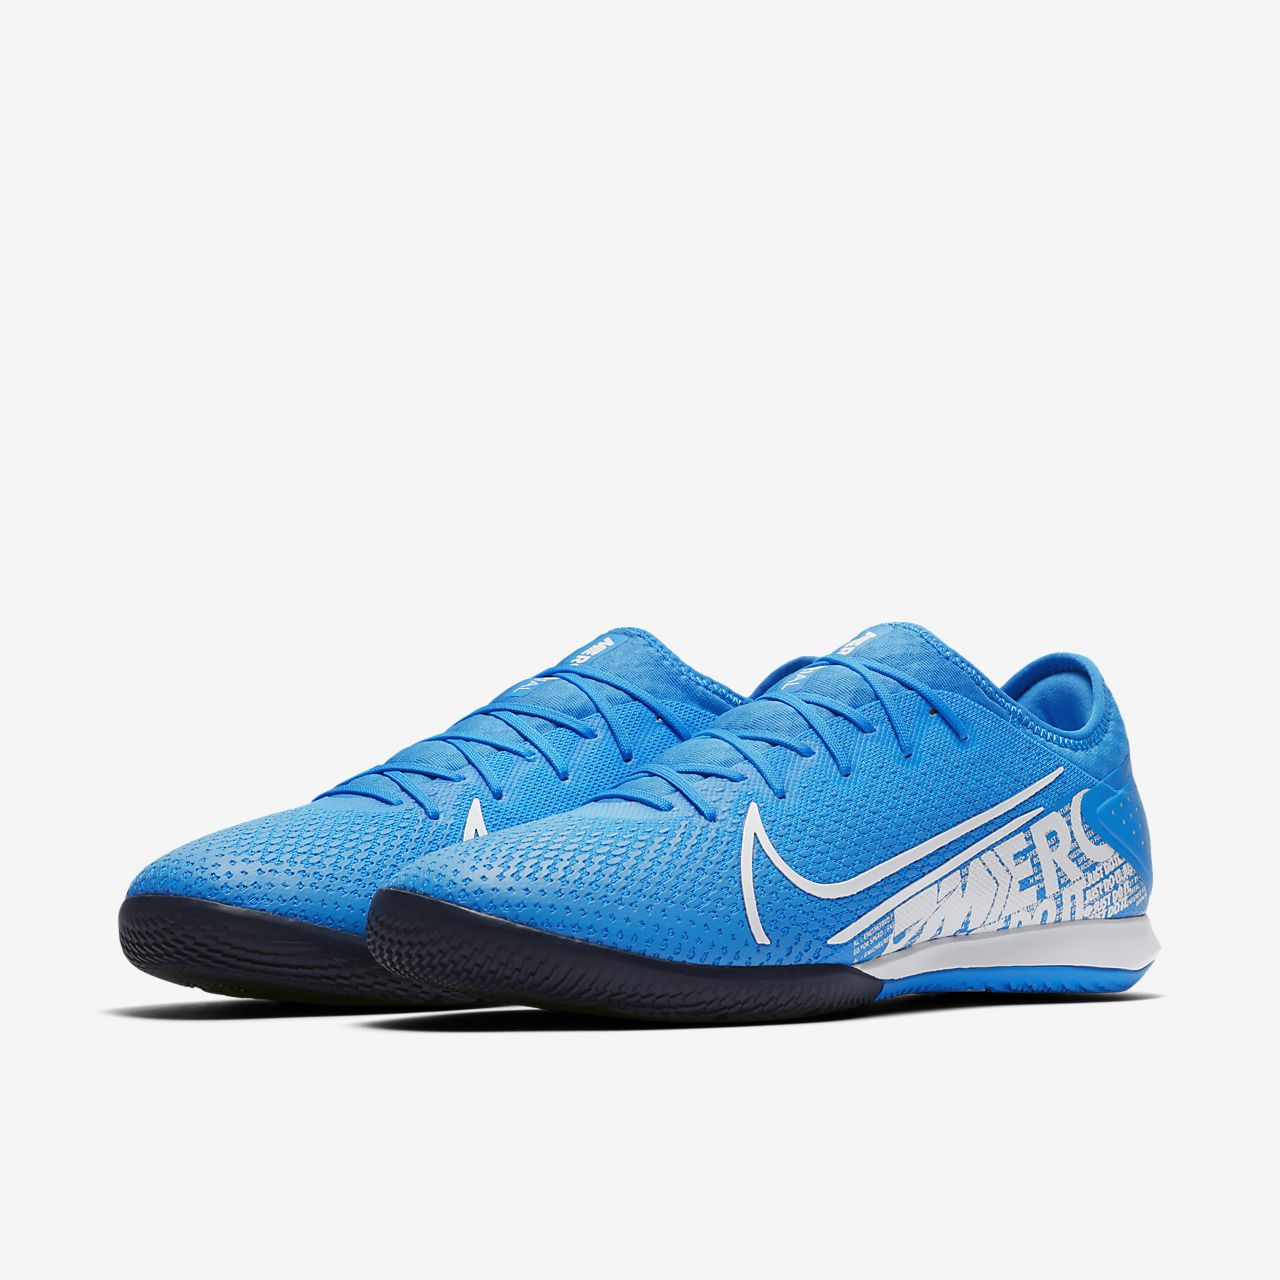 Nike Mercurial Vapor 13 Pro FG Soccer Cleats Blue. Pinterest